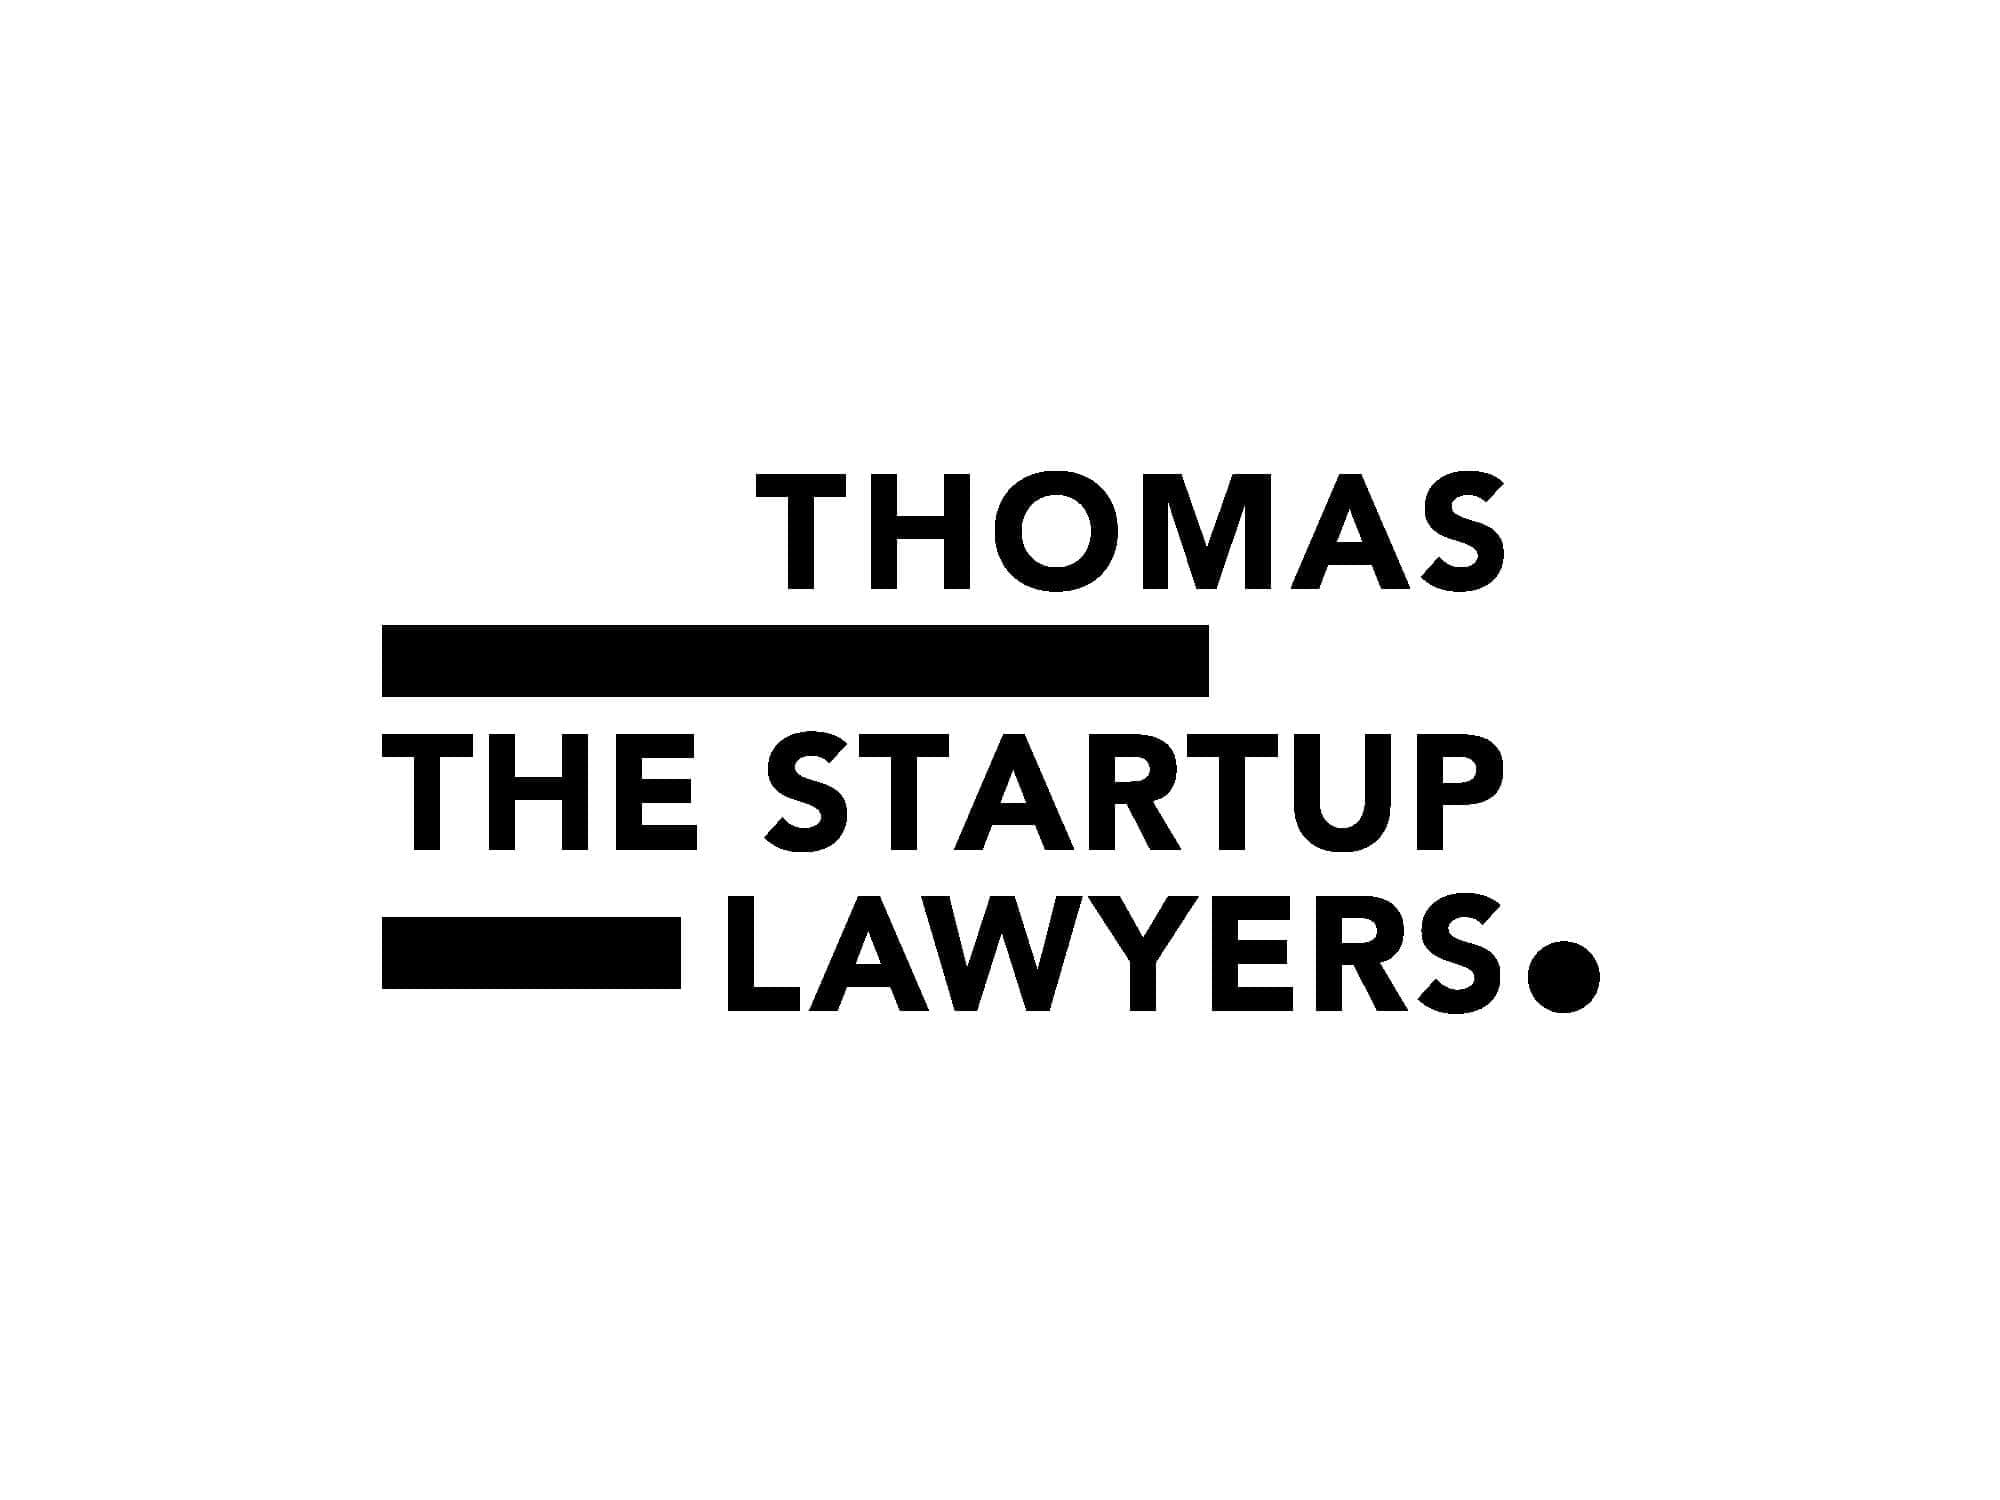 Thomas the startup lawyers extension du logotype de Thomas the startup lawyers. du Ichetkar inspiration Bauhaus